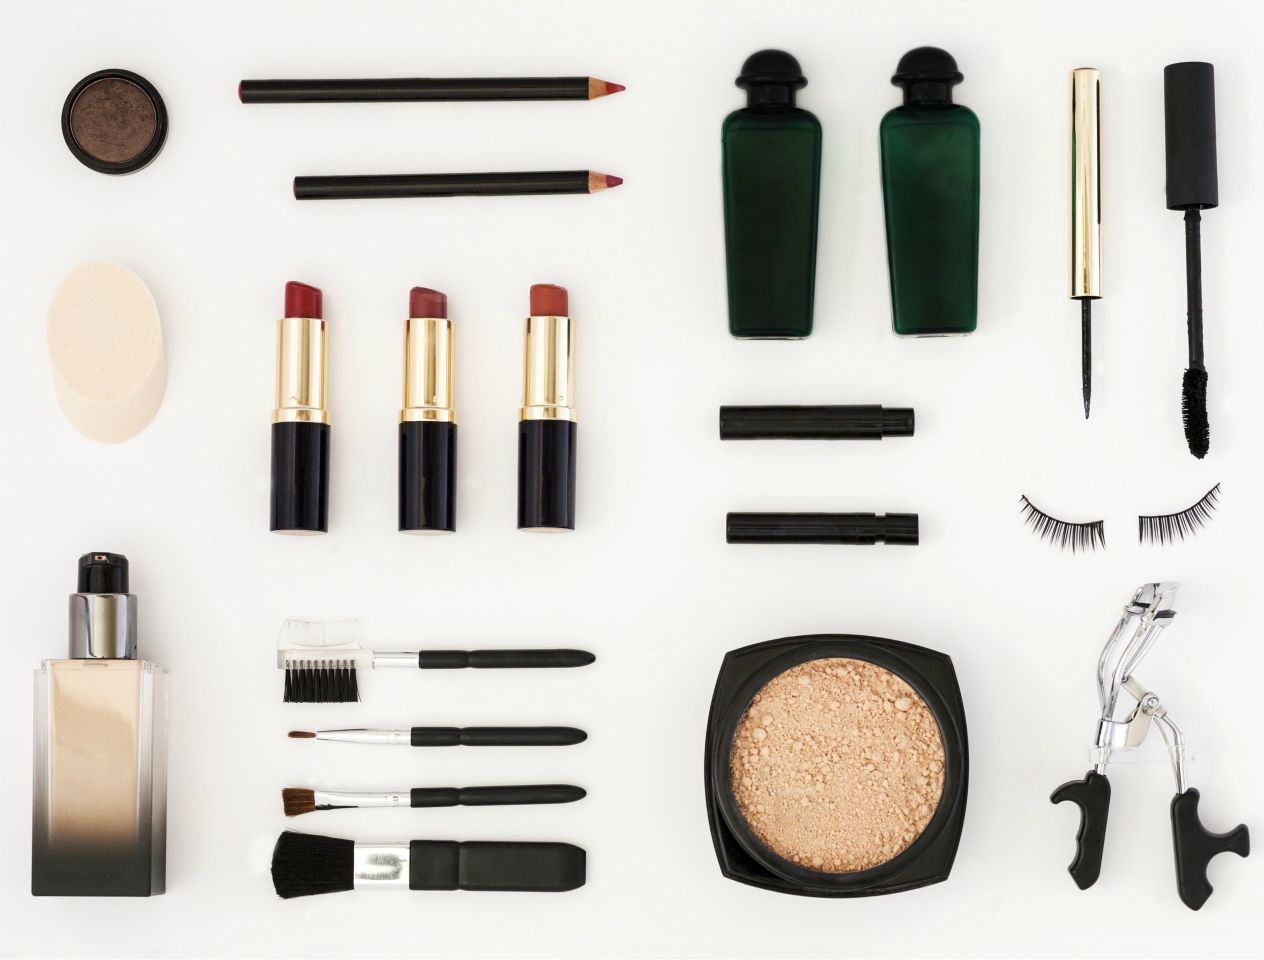 How to Marie Kondo your makeup bag